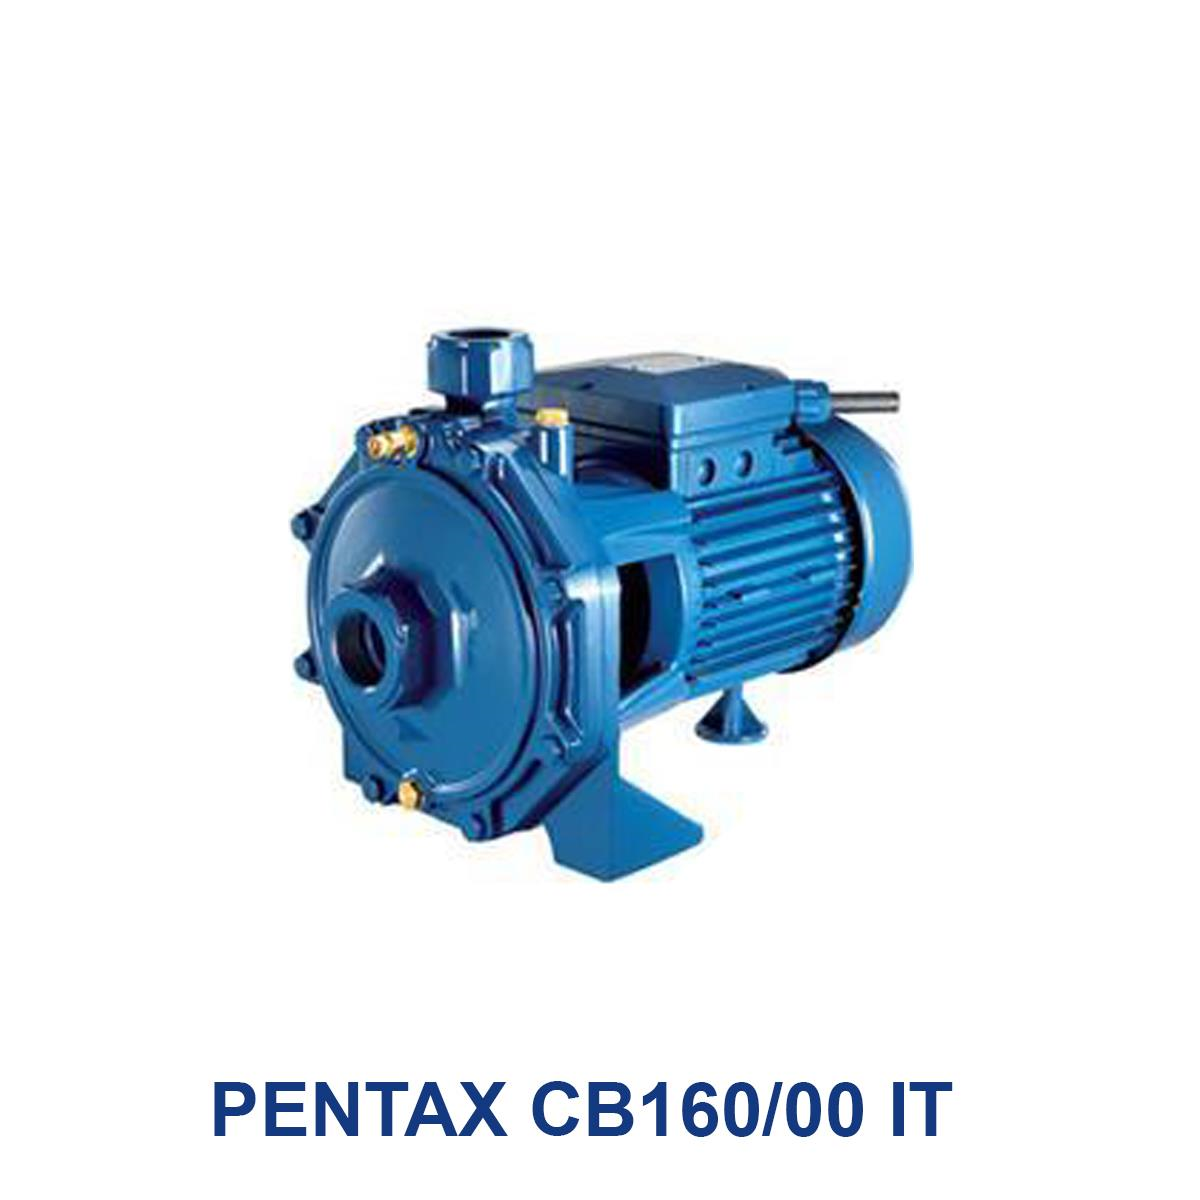 PENTAX-CB160-00-IT